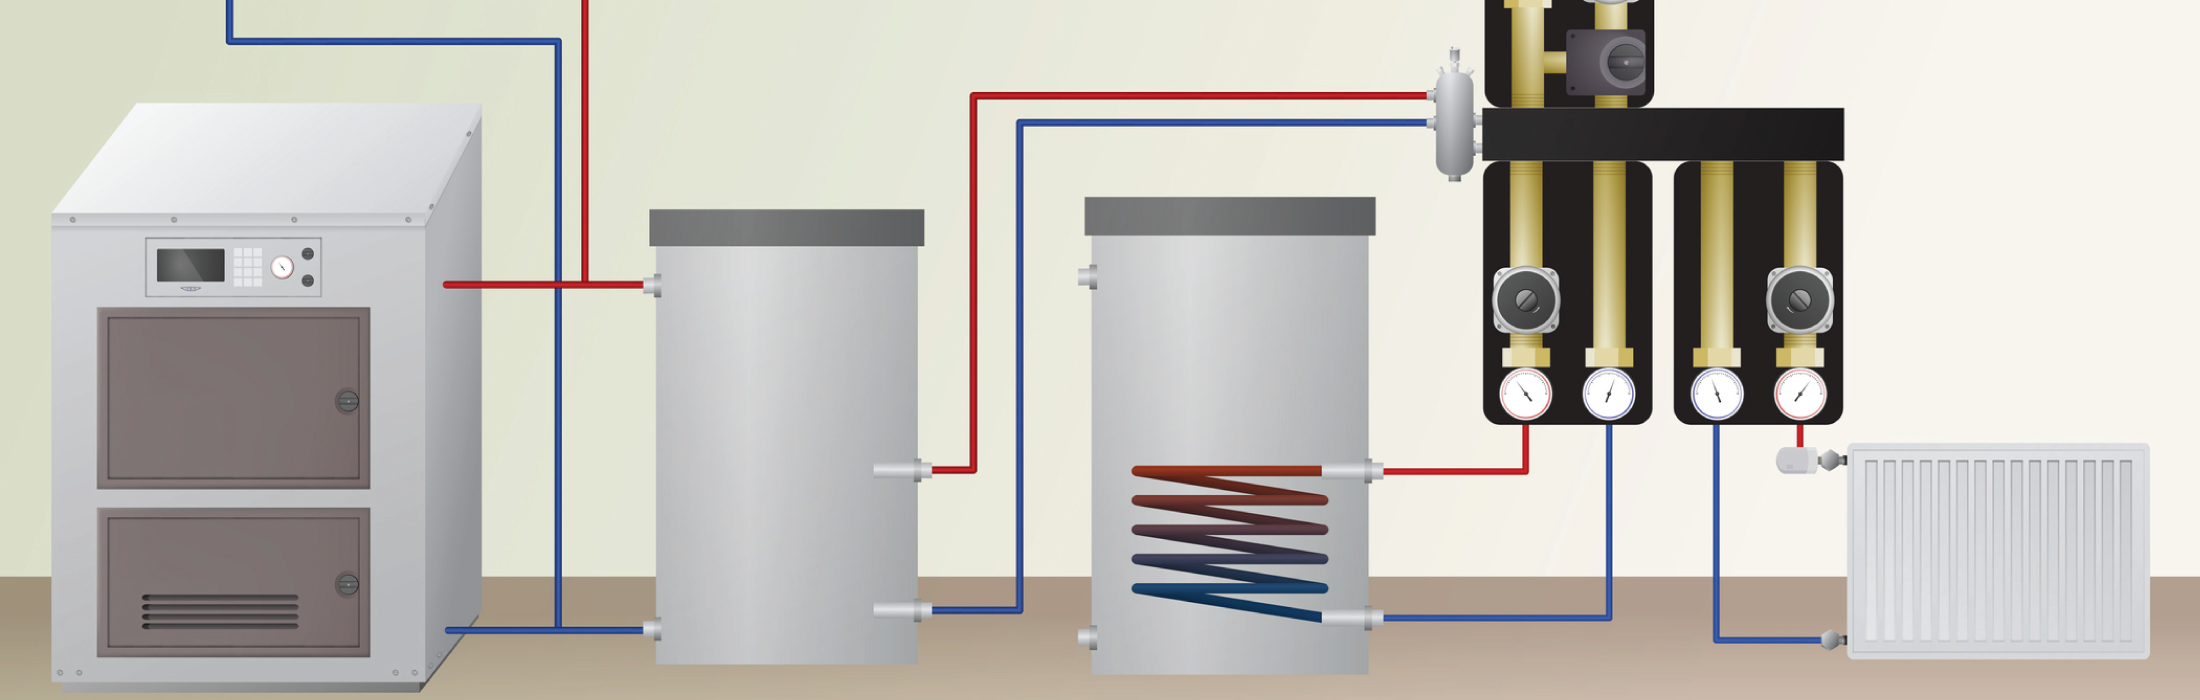 Illustration of gas furnace vs electric heat pump